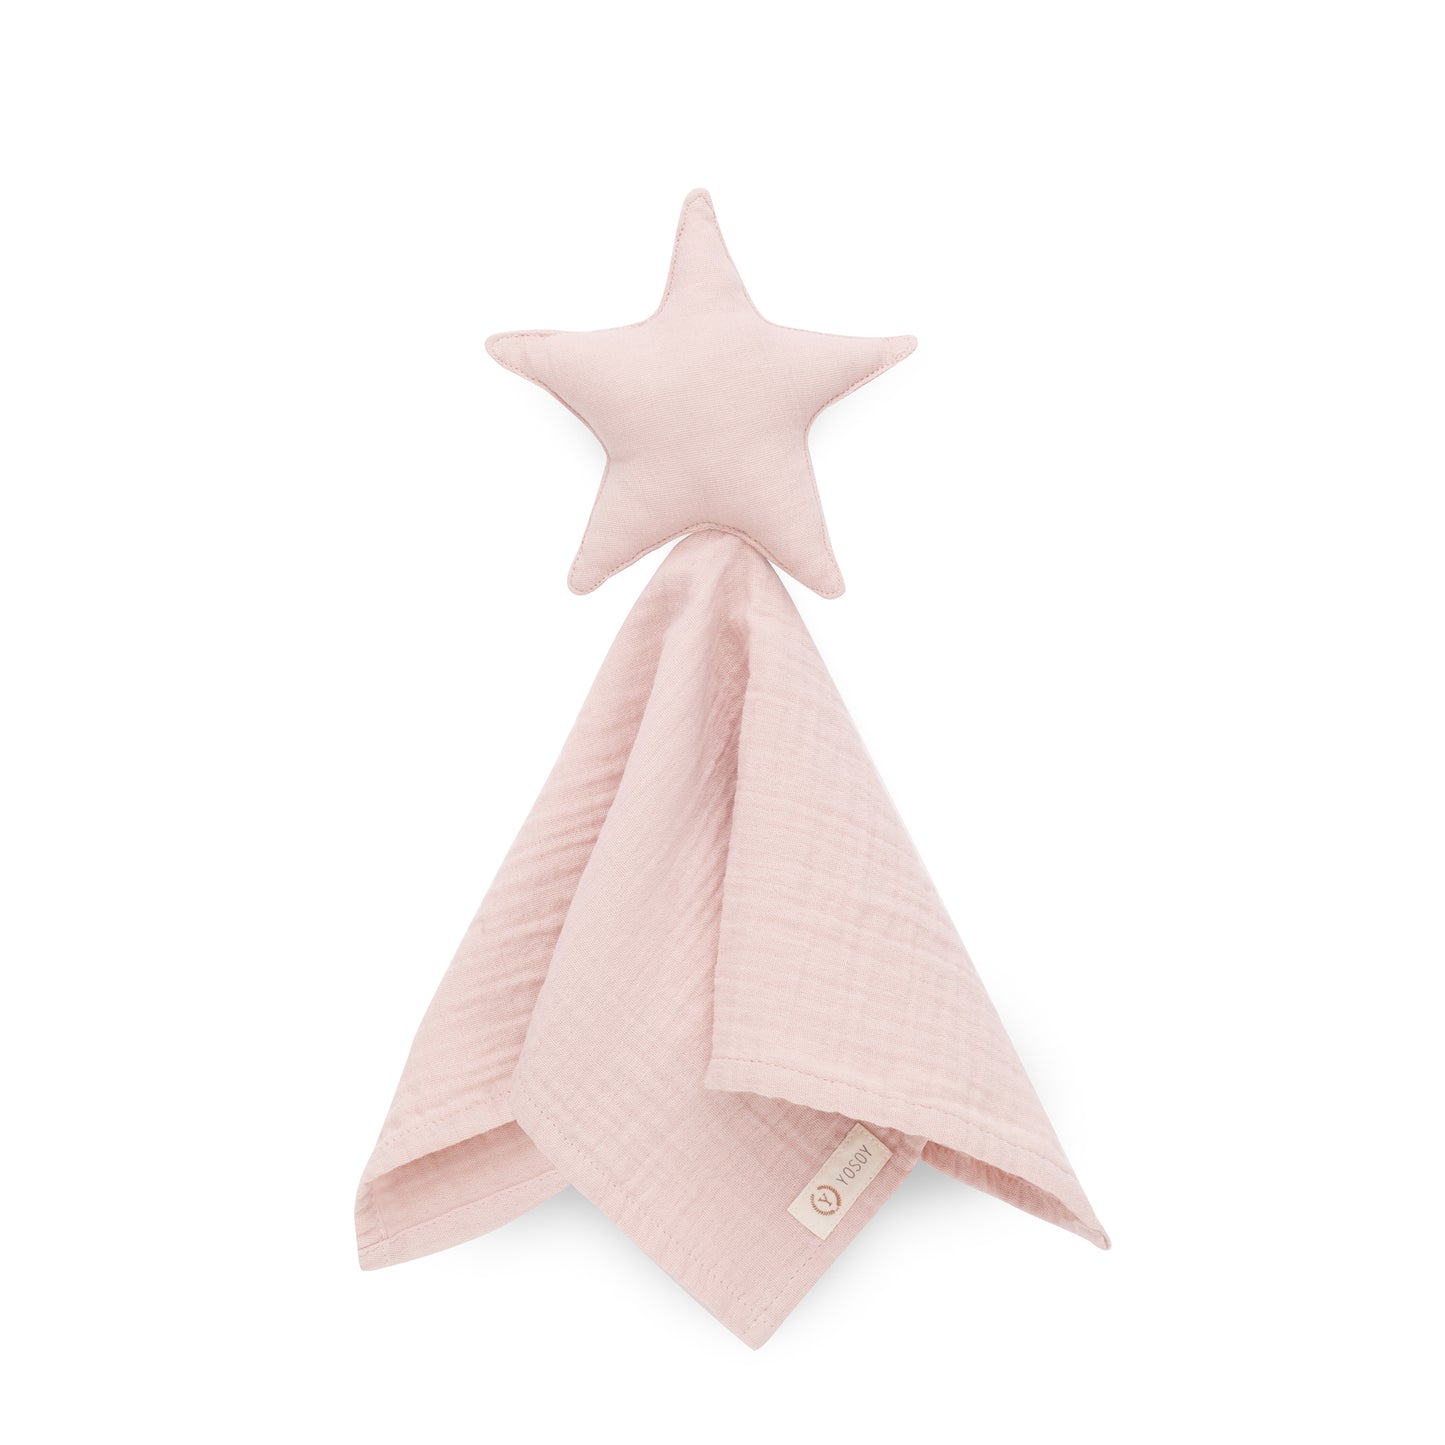 Lovey Powder Pink Star - Security Blanket